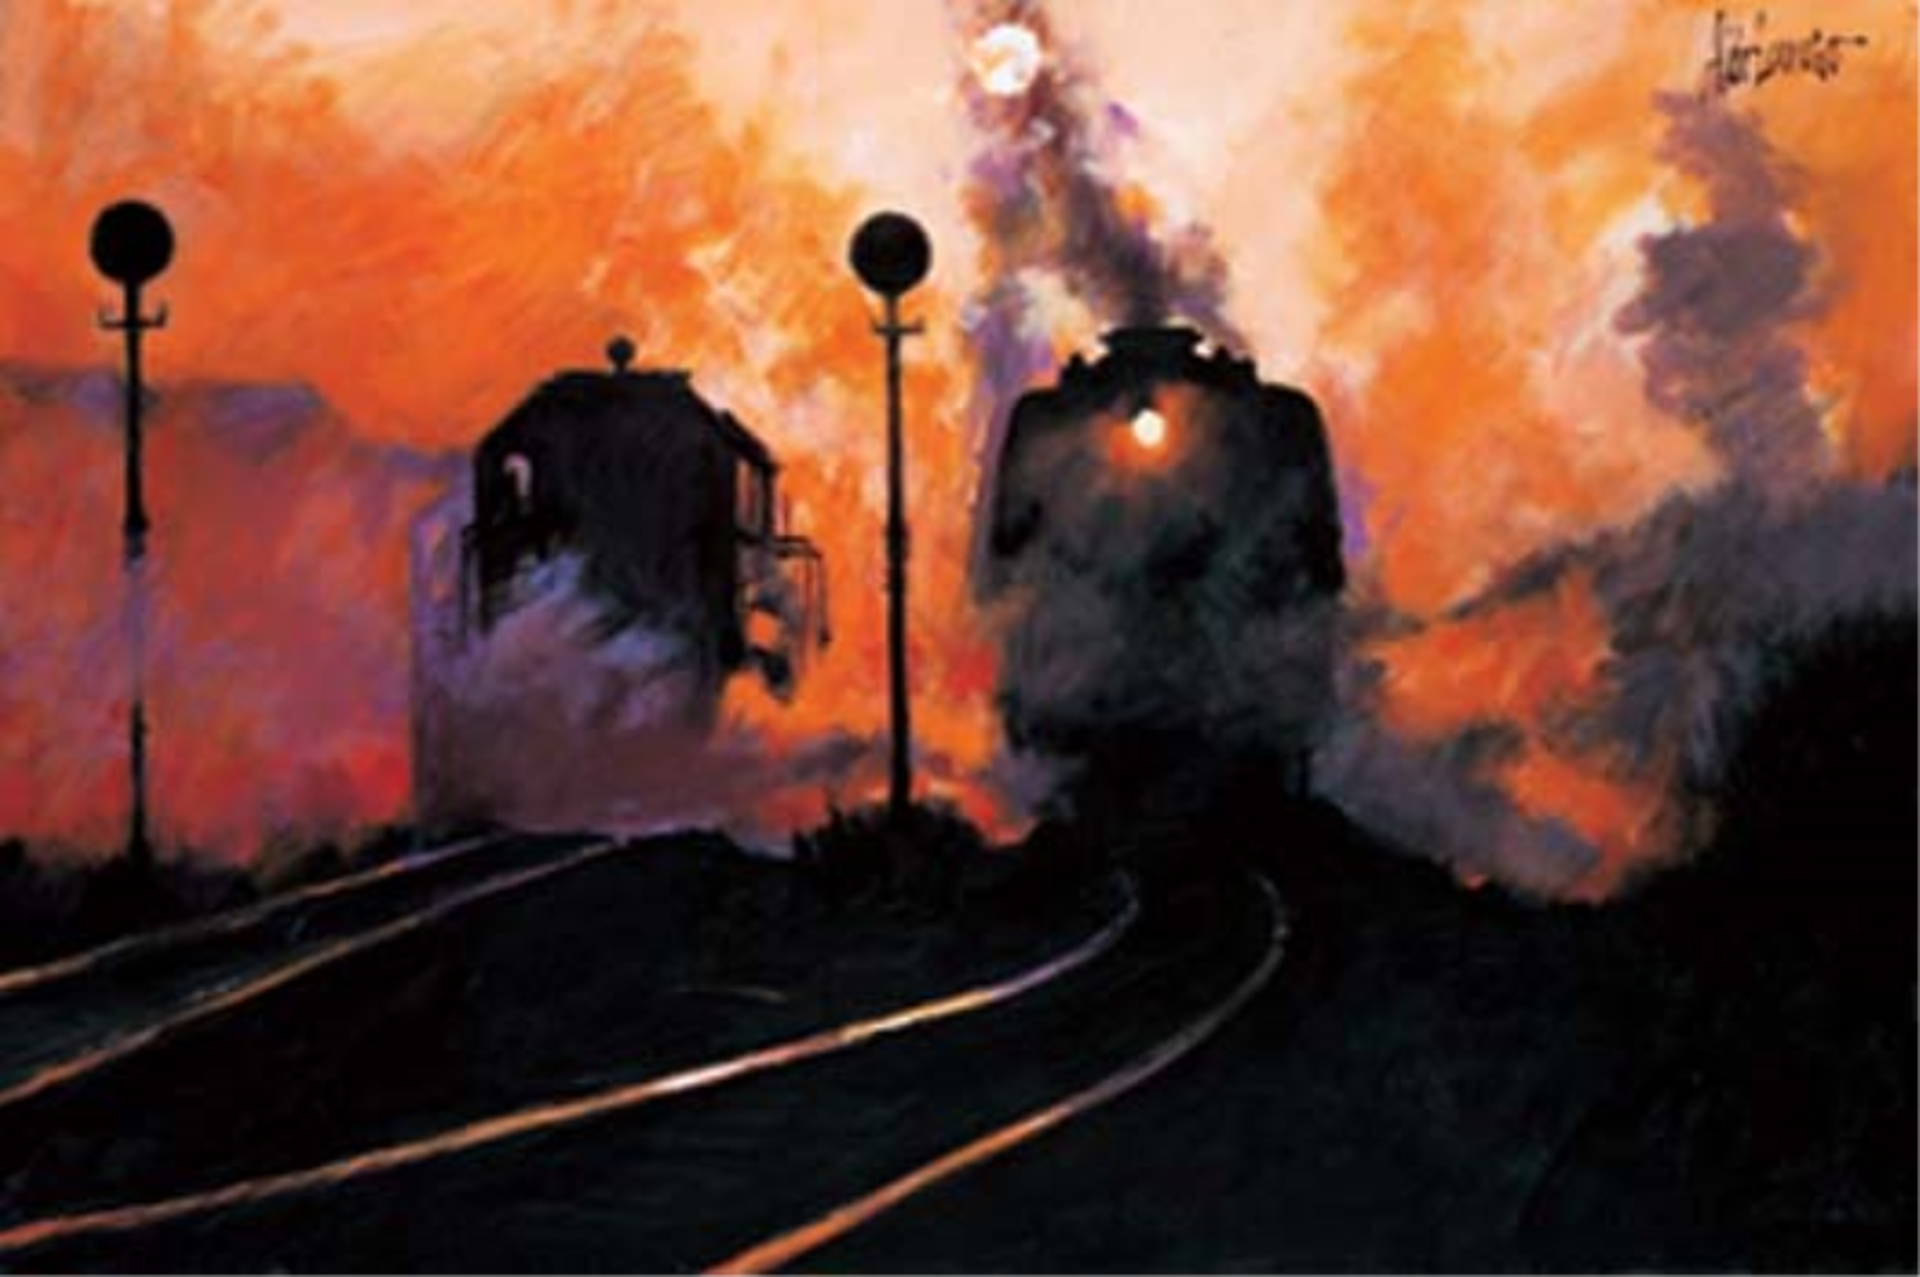 Twilight Tracks (S/N) by Aldo Luongo